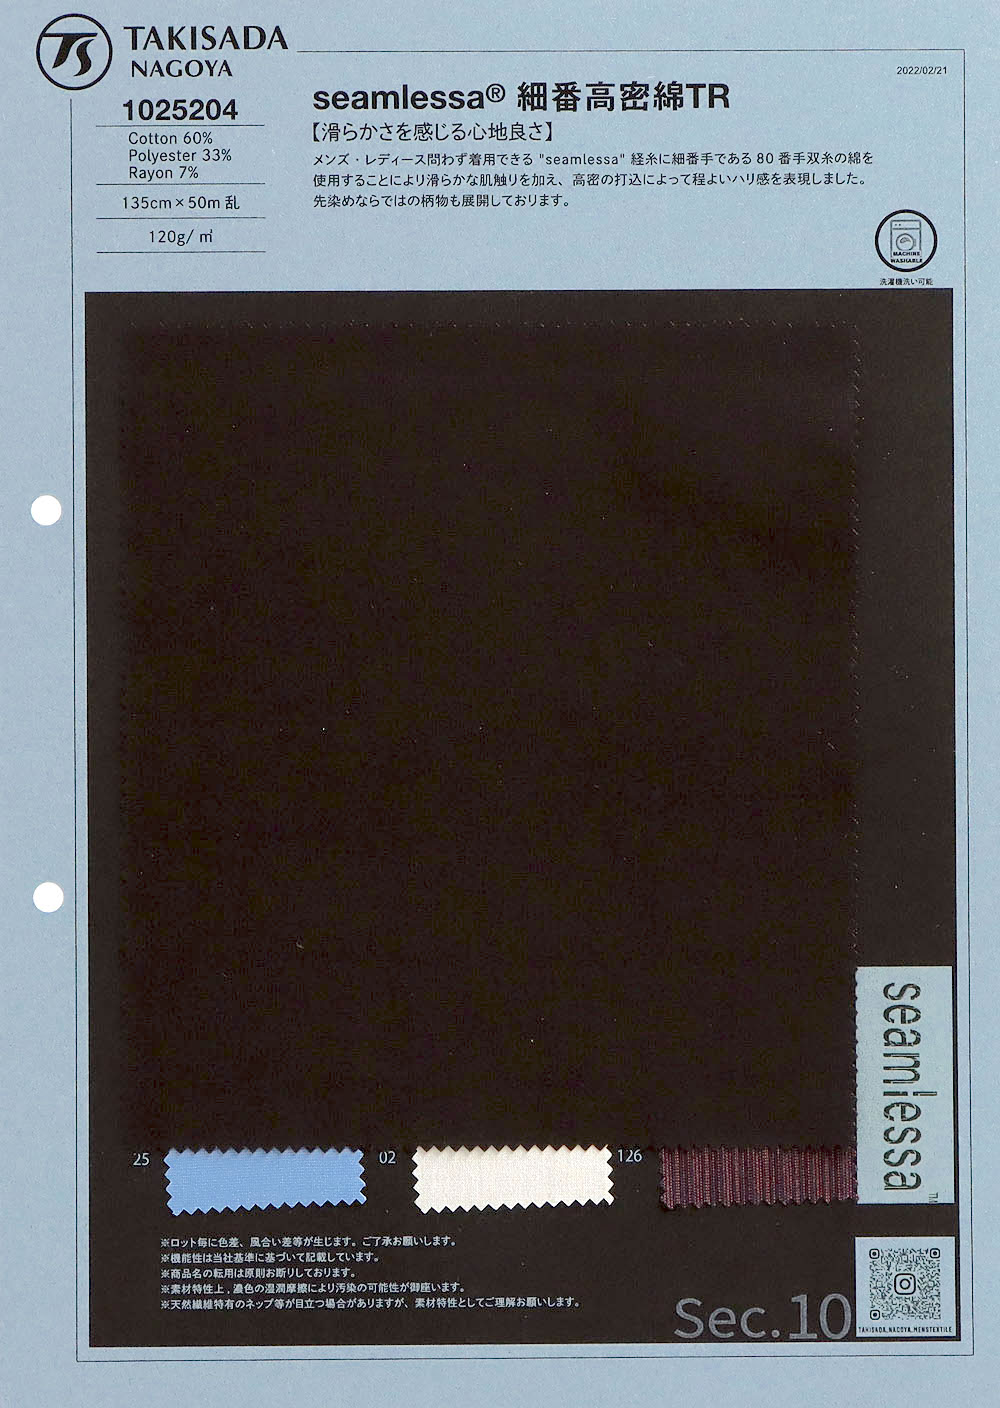 1025204 Seamlessa (R) Fine Number High Density Cotton TR[Textilgewebe] Takisada Nagoya